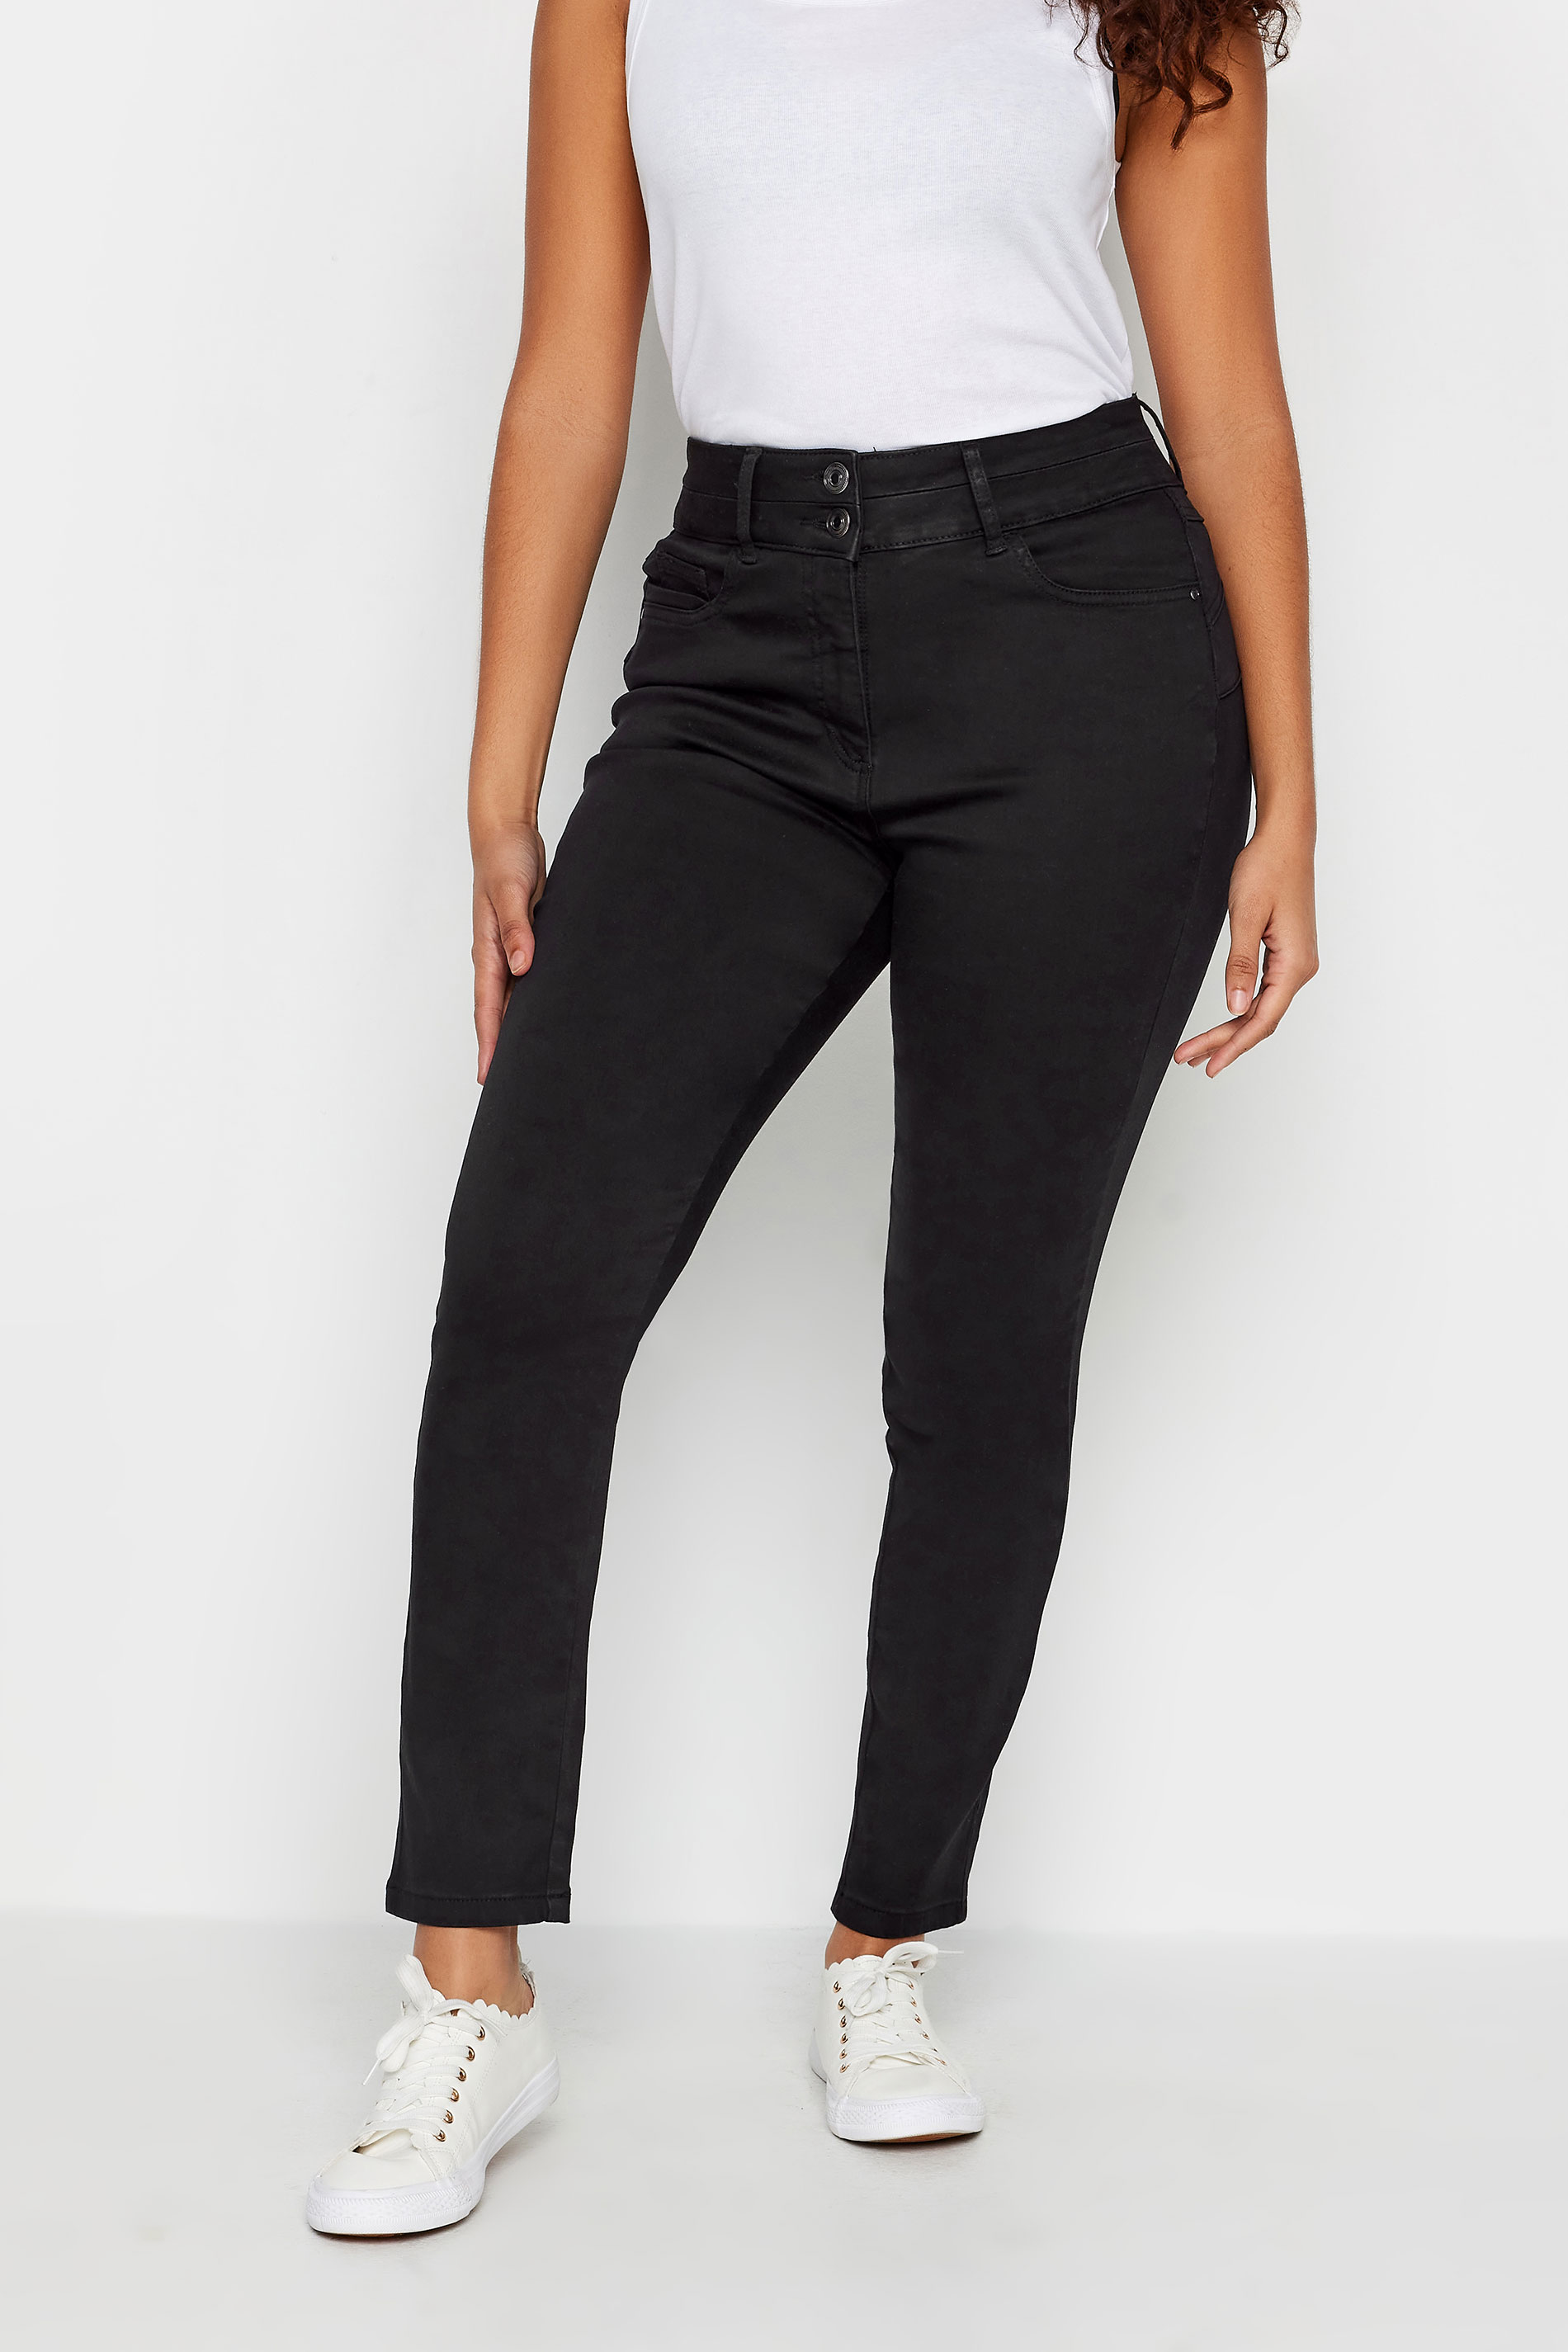 M&Co Black Lift & Shape Slim Leg Jeans | M&Co 2